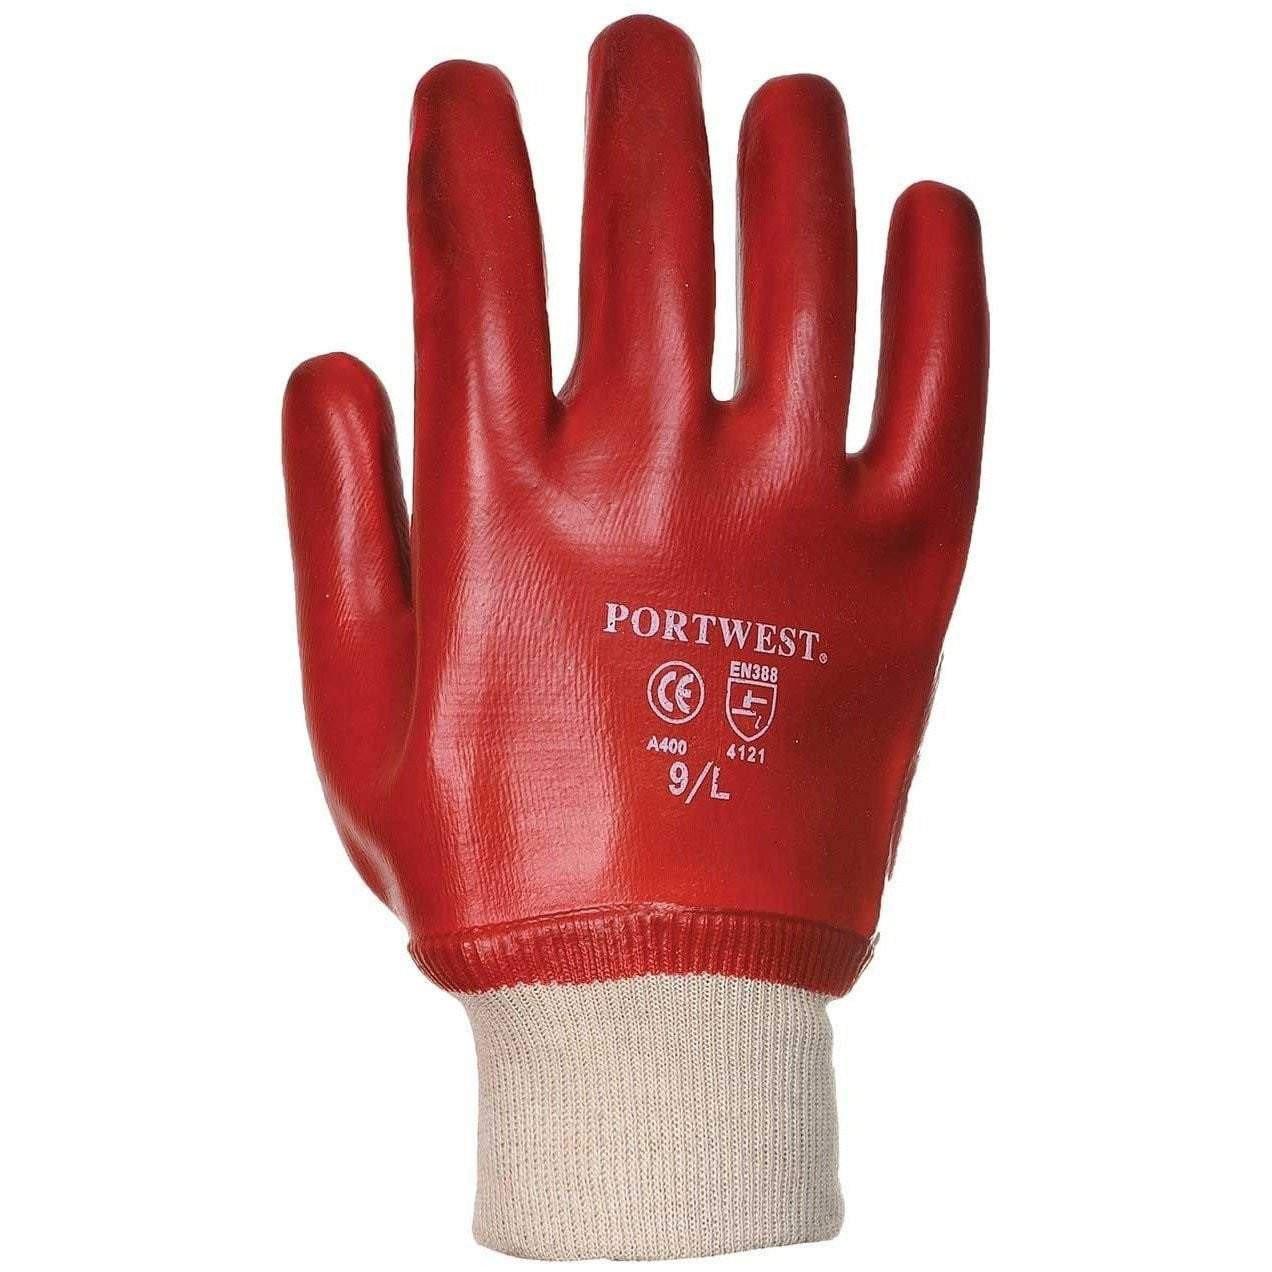 Glove Pvc Dipped-Gloves-Private Label PPE-Wrist-diyshop.co.za